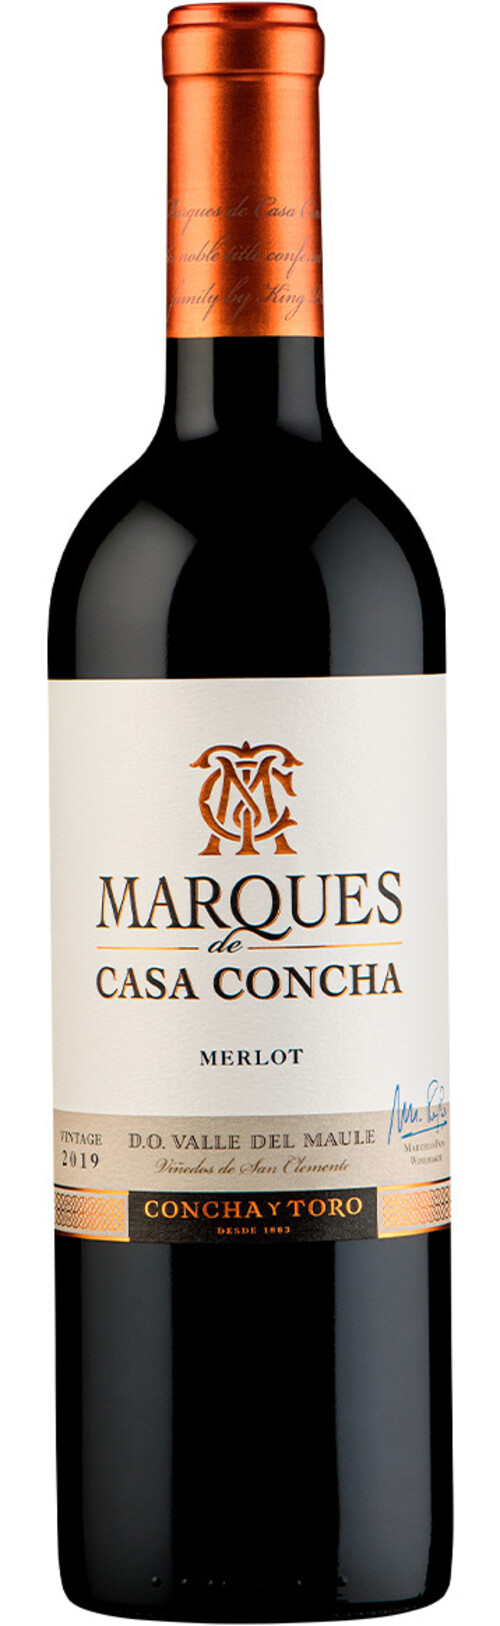 Rượu vang đỏ Chile Marques de Casa Concha Merlot